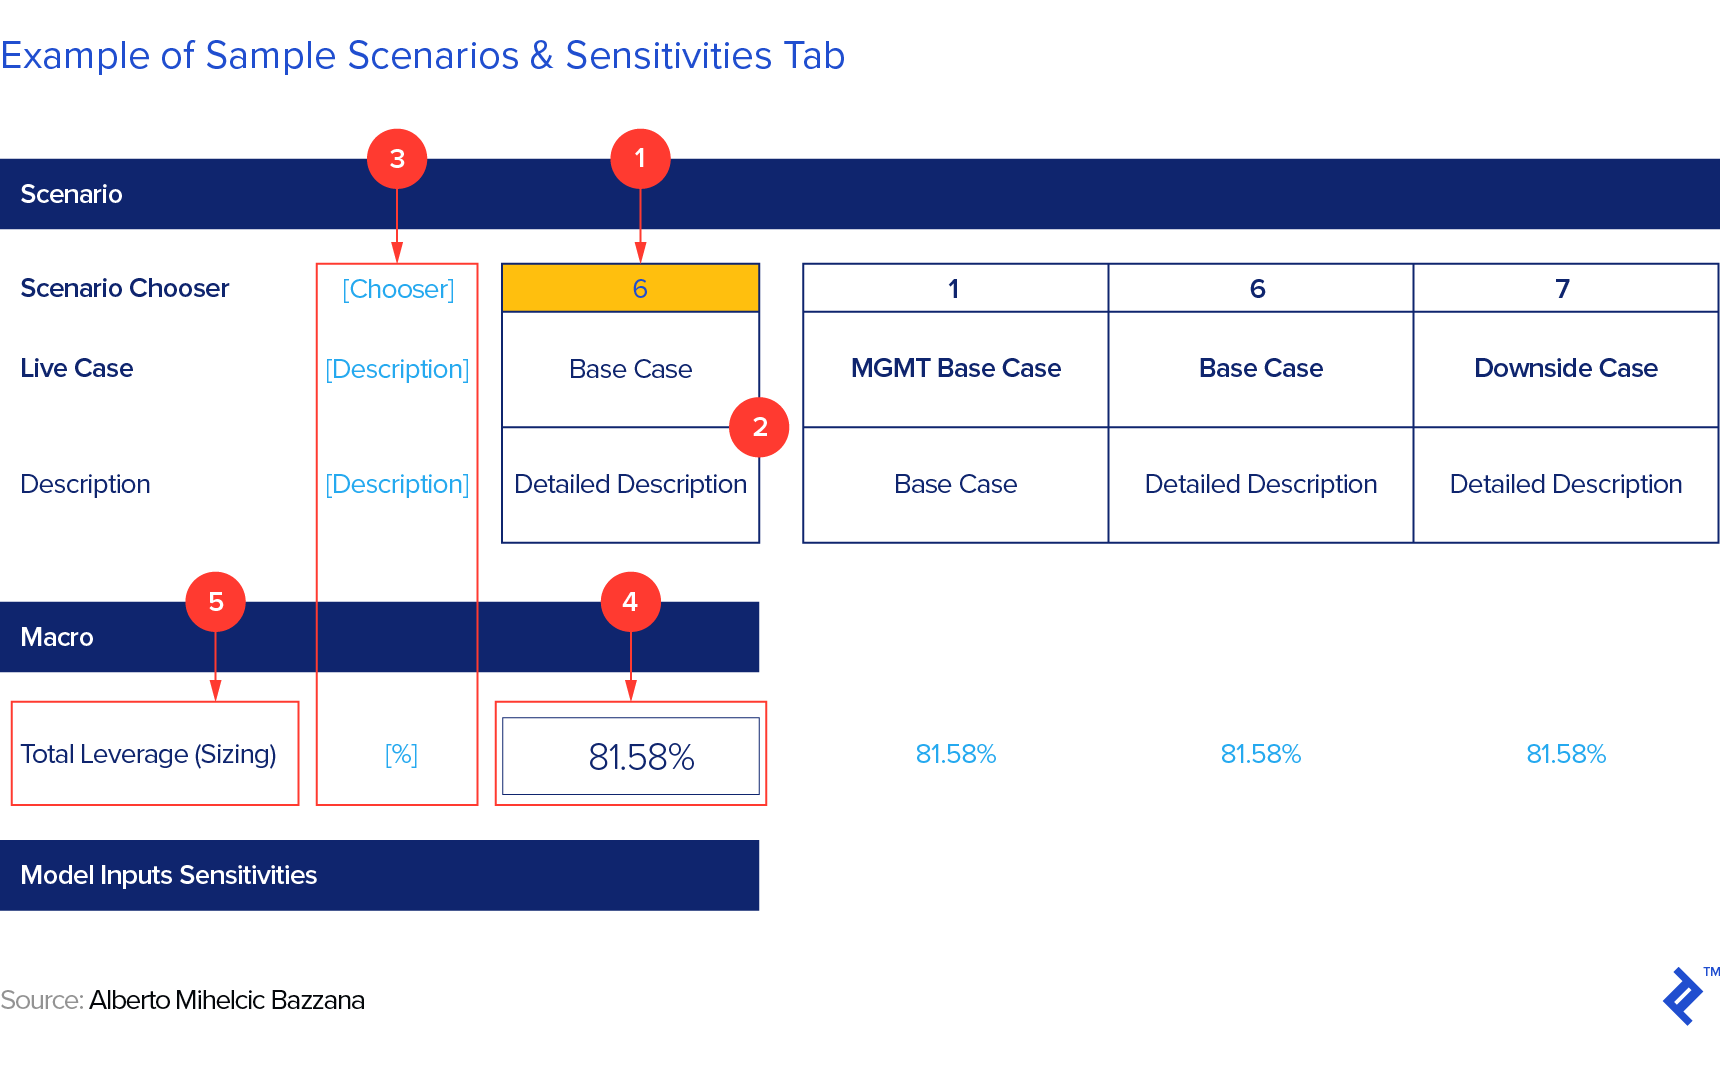 Example of a sample scenarios and sensitivities tab